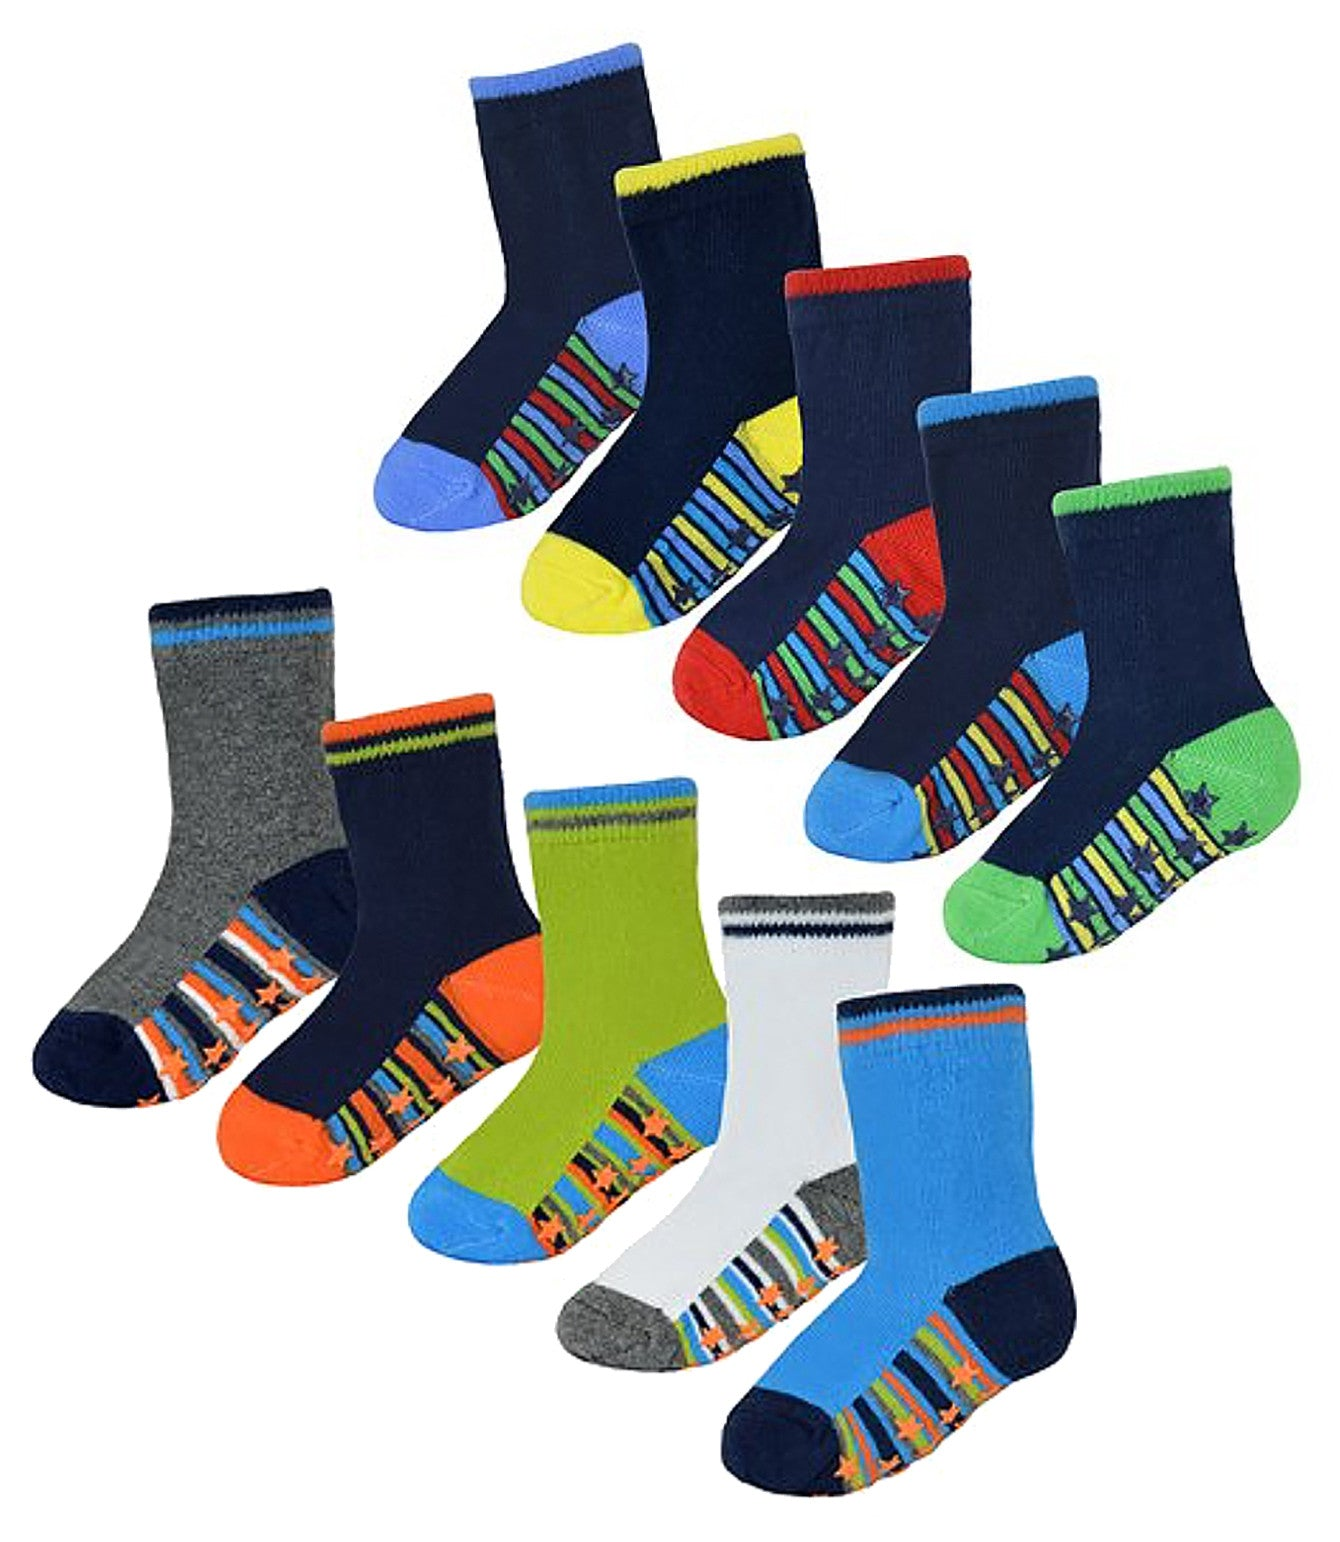 10 Pairs Non-Slip Cotton Baby Boy Socks with Stars